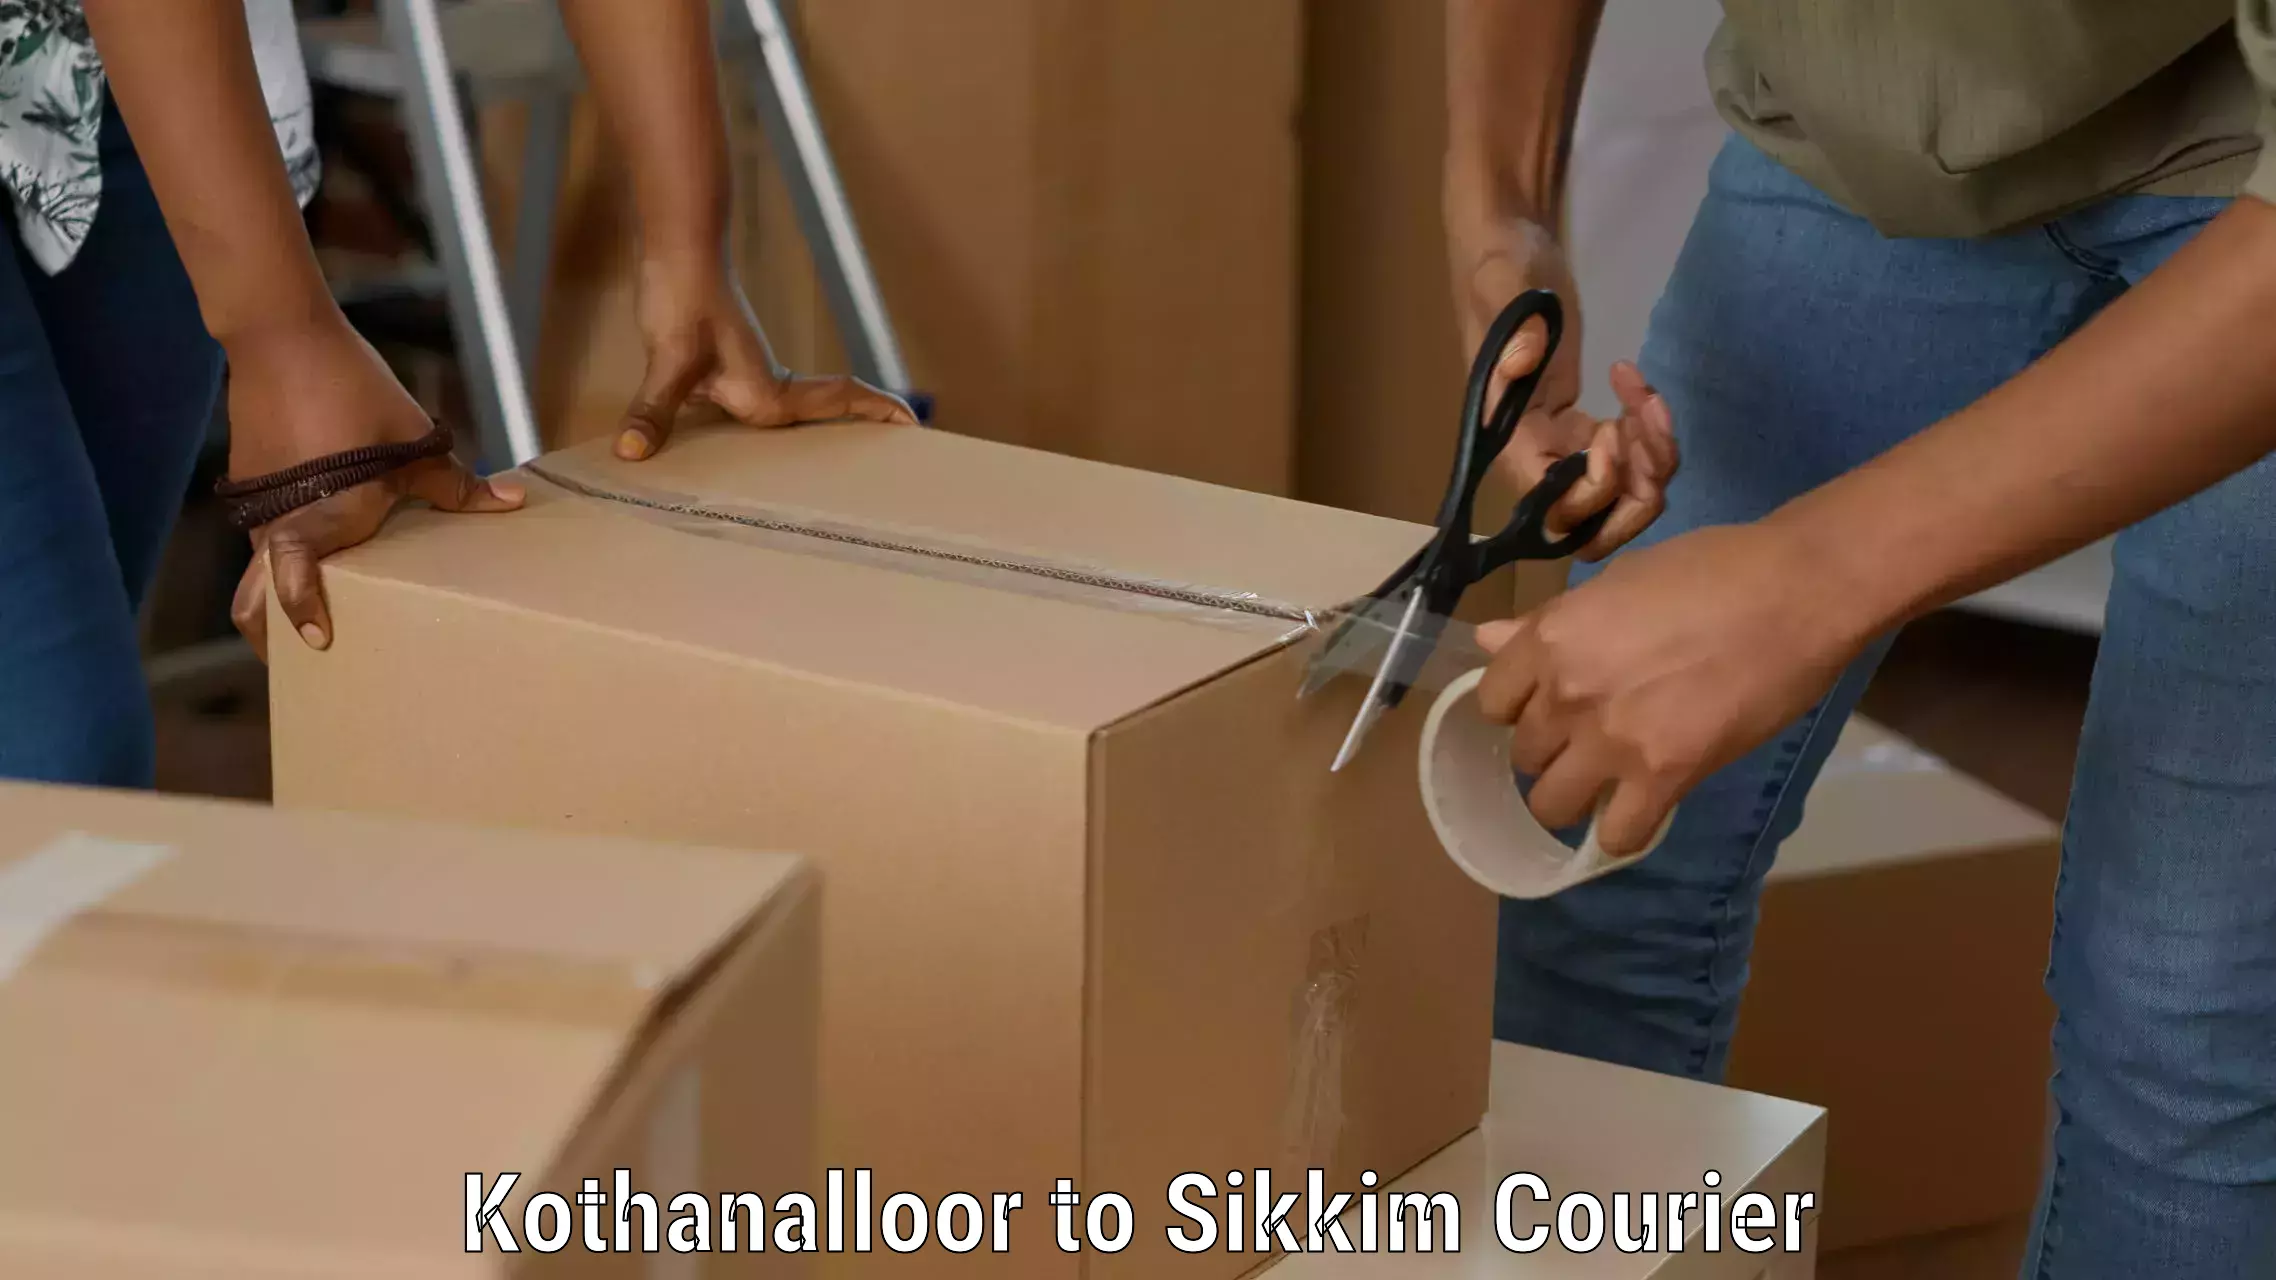 Custom courier packaging Kothanalloor to Mangan